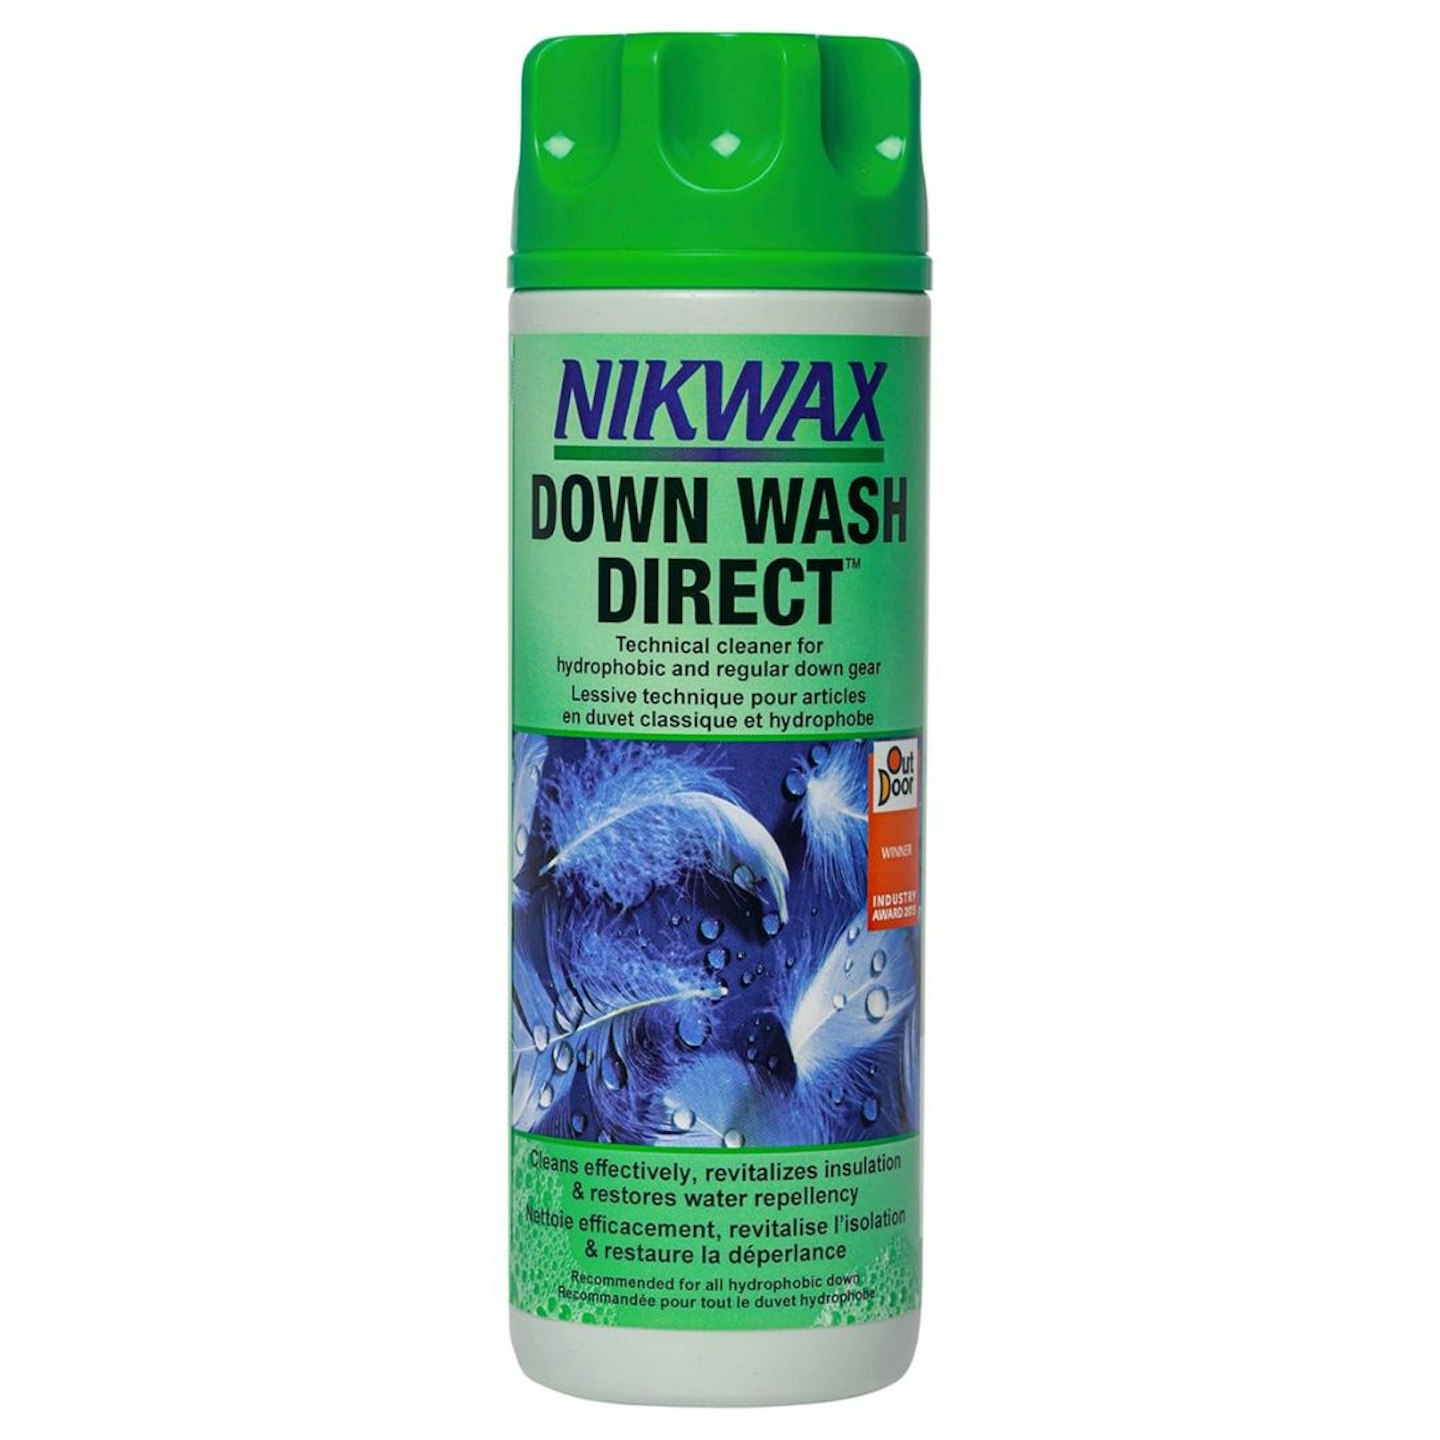 Nikwax Down Wash.Direct